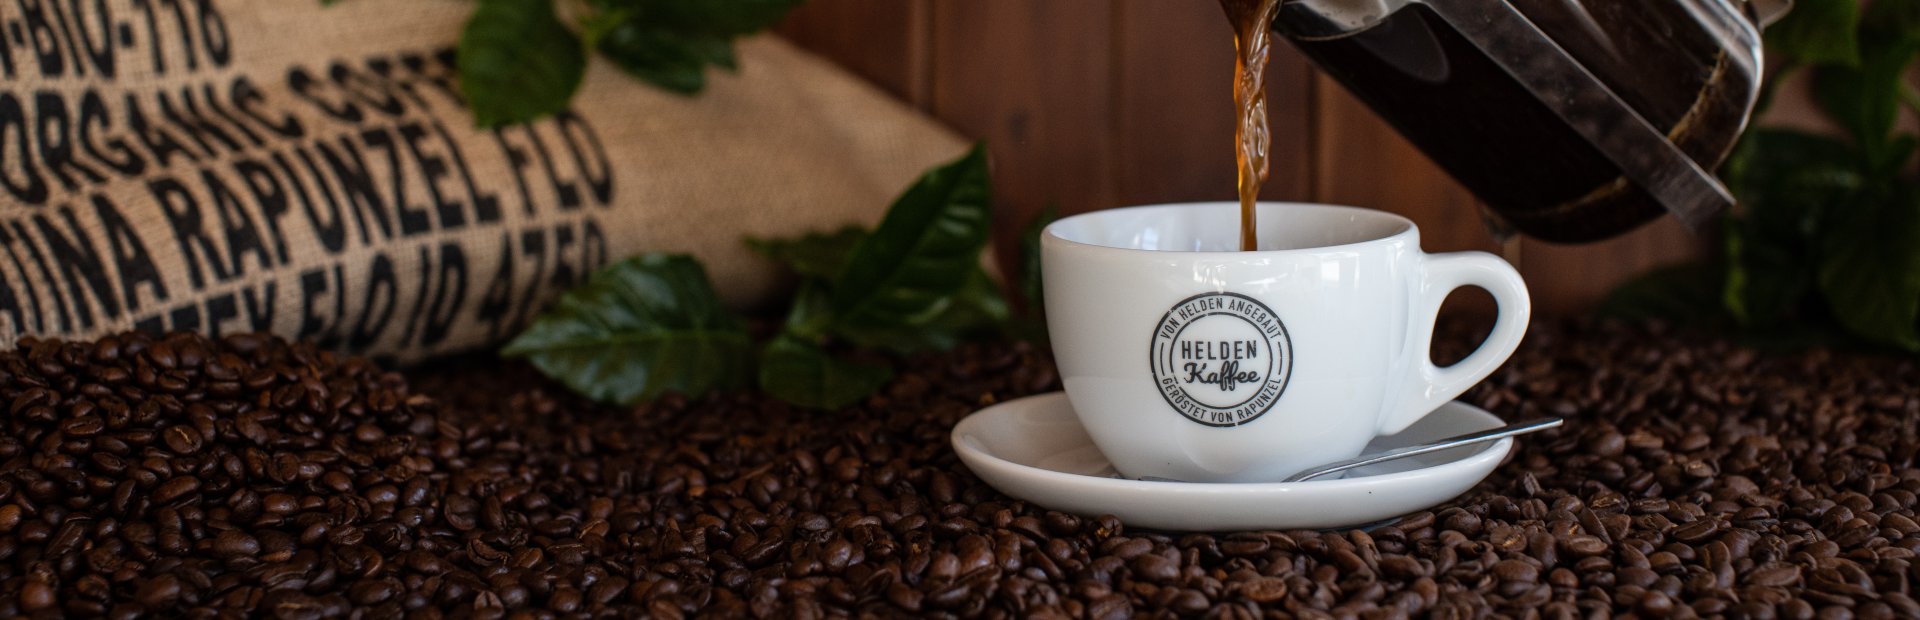 Kaffeeworkshop in der Rapunzel Welt